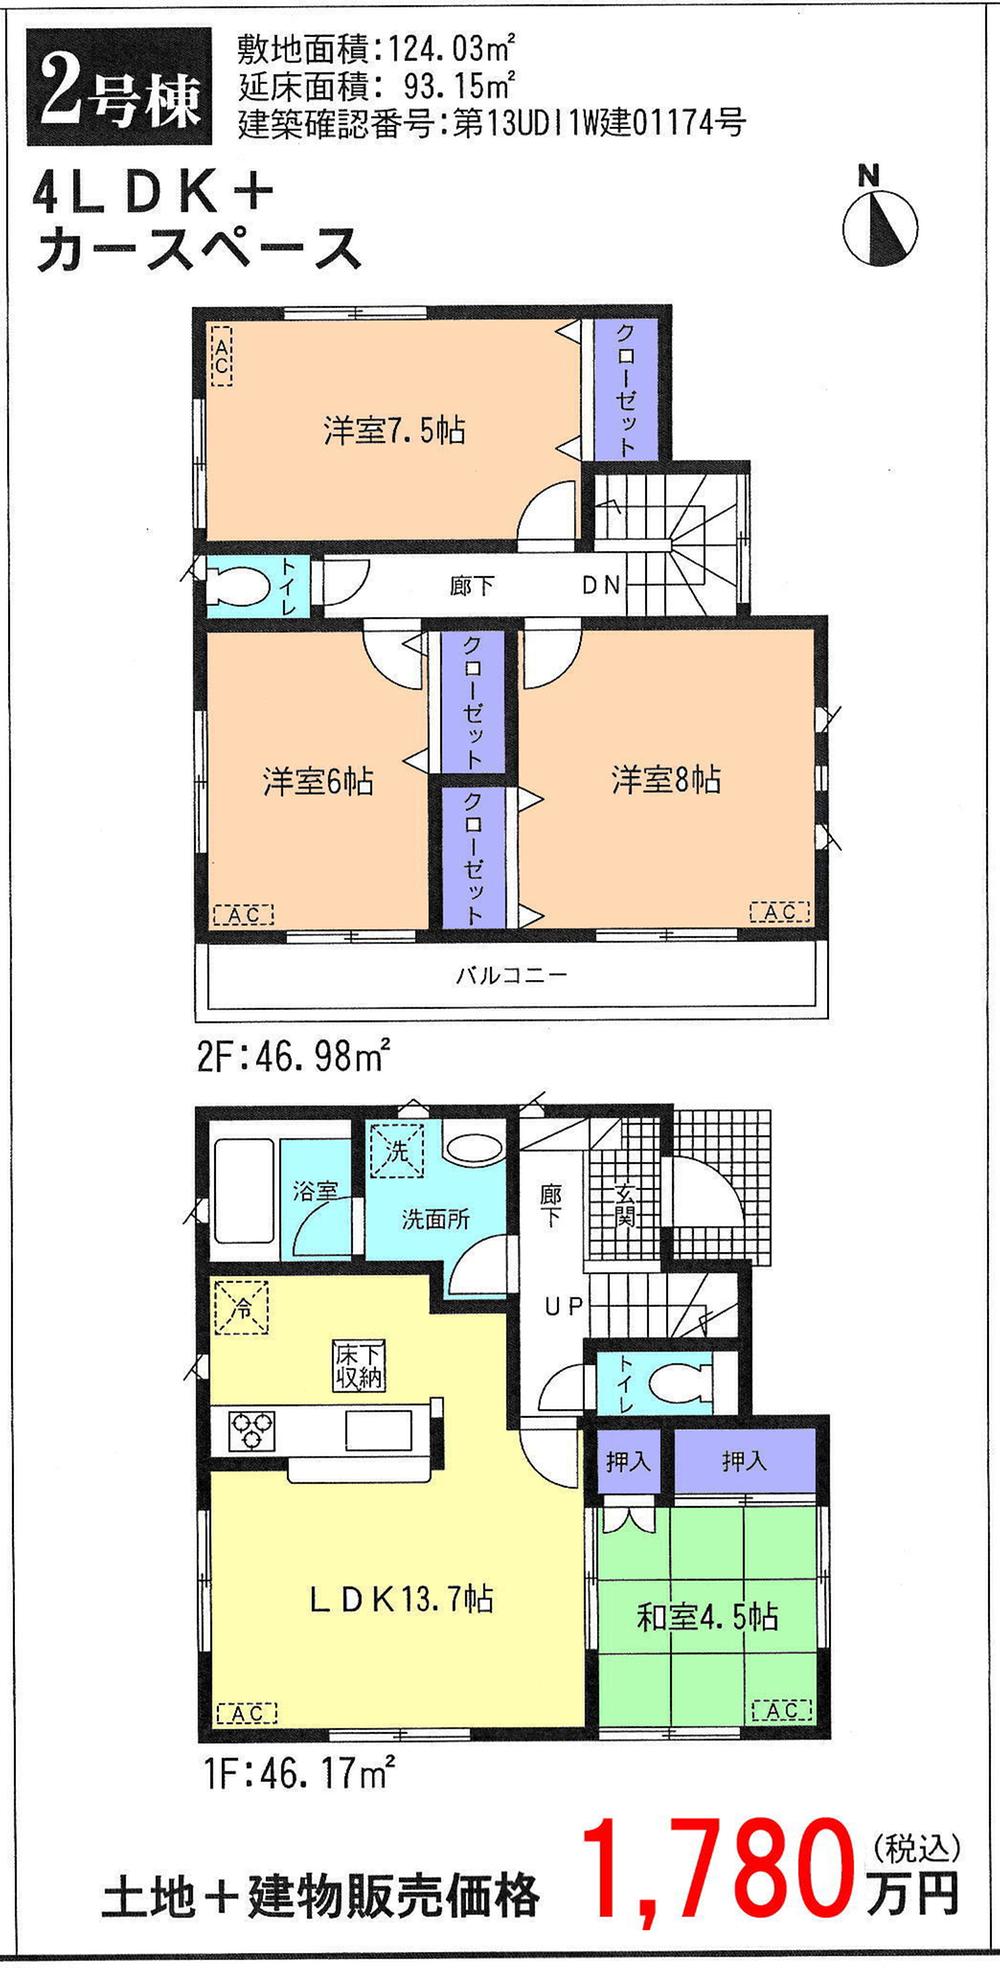 Floor plan. (Building 2), Price 17.8 million yen, 4LDK, Land area 124.03 sq m , Building area 93.15 sq m